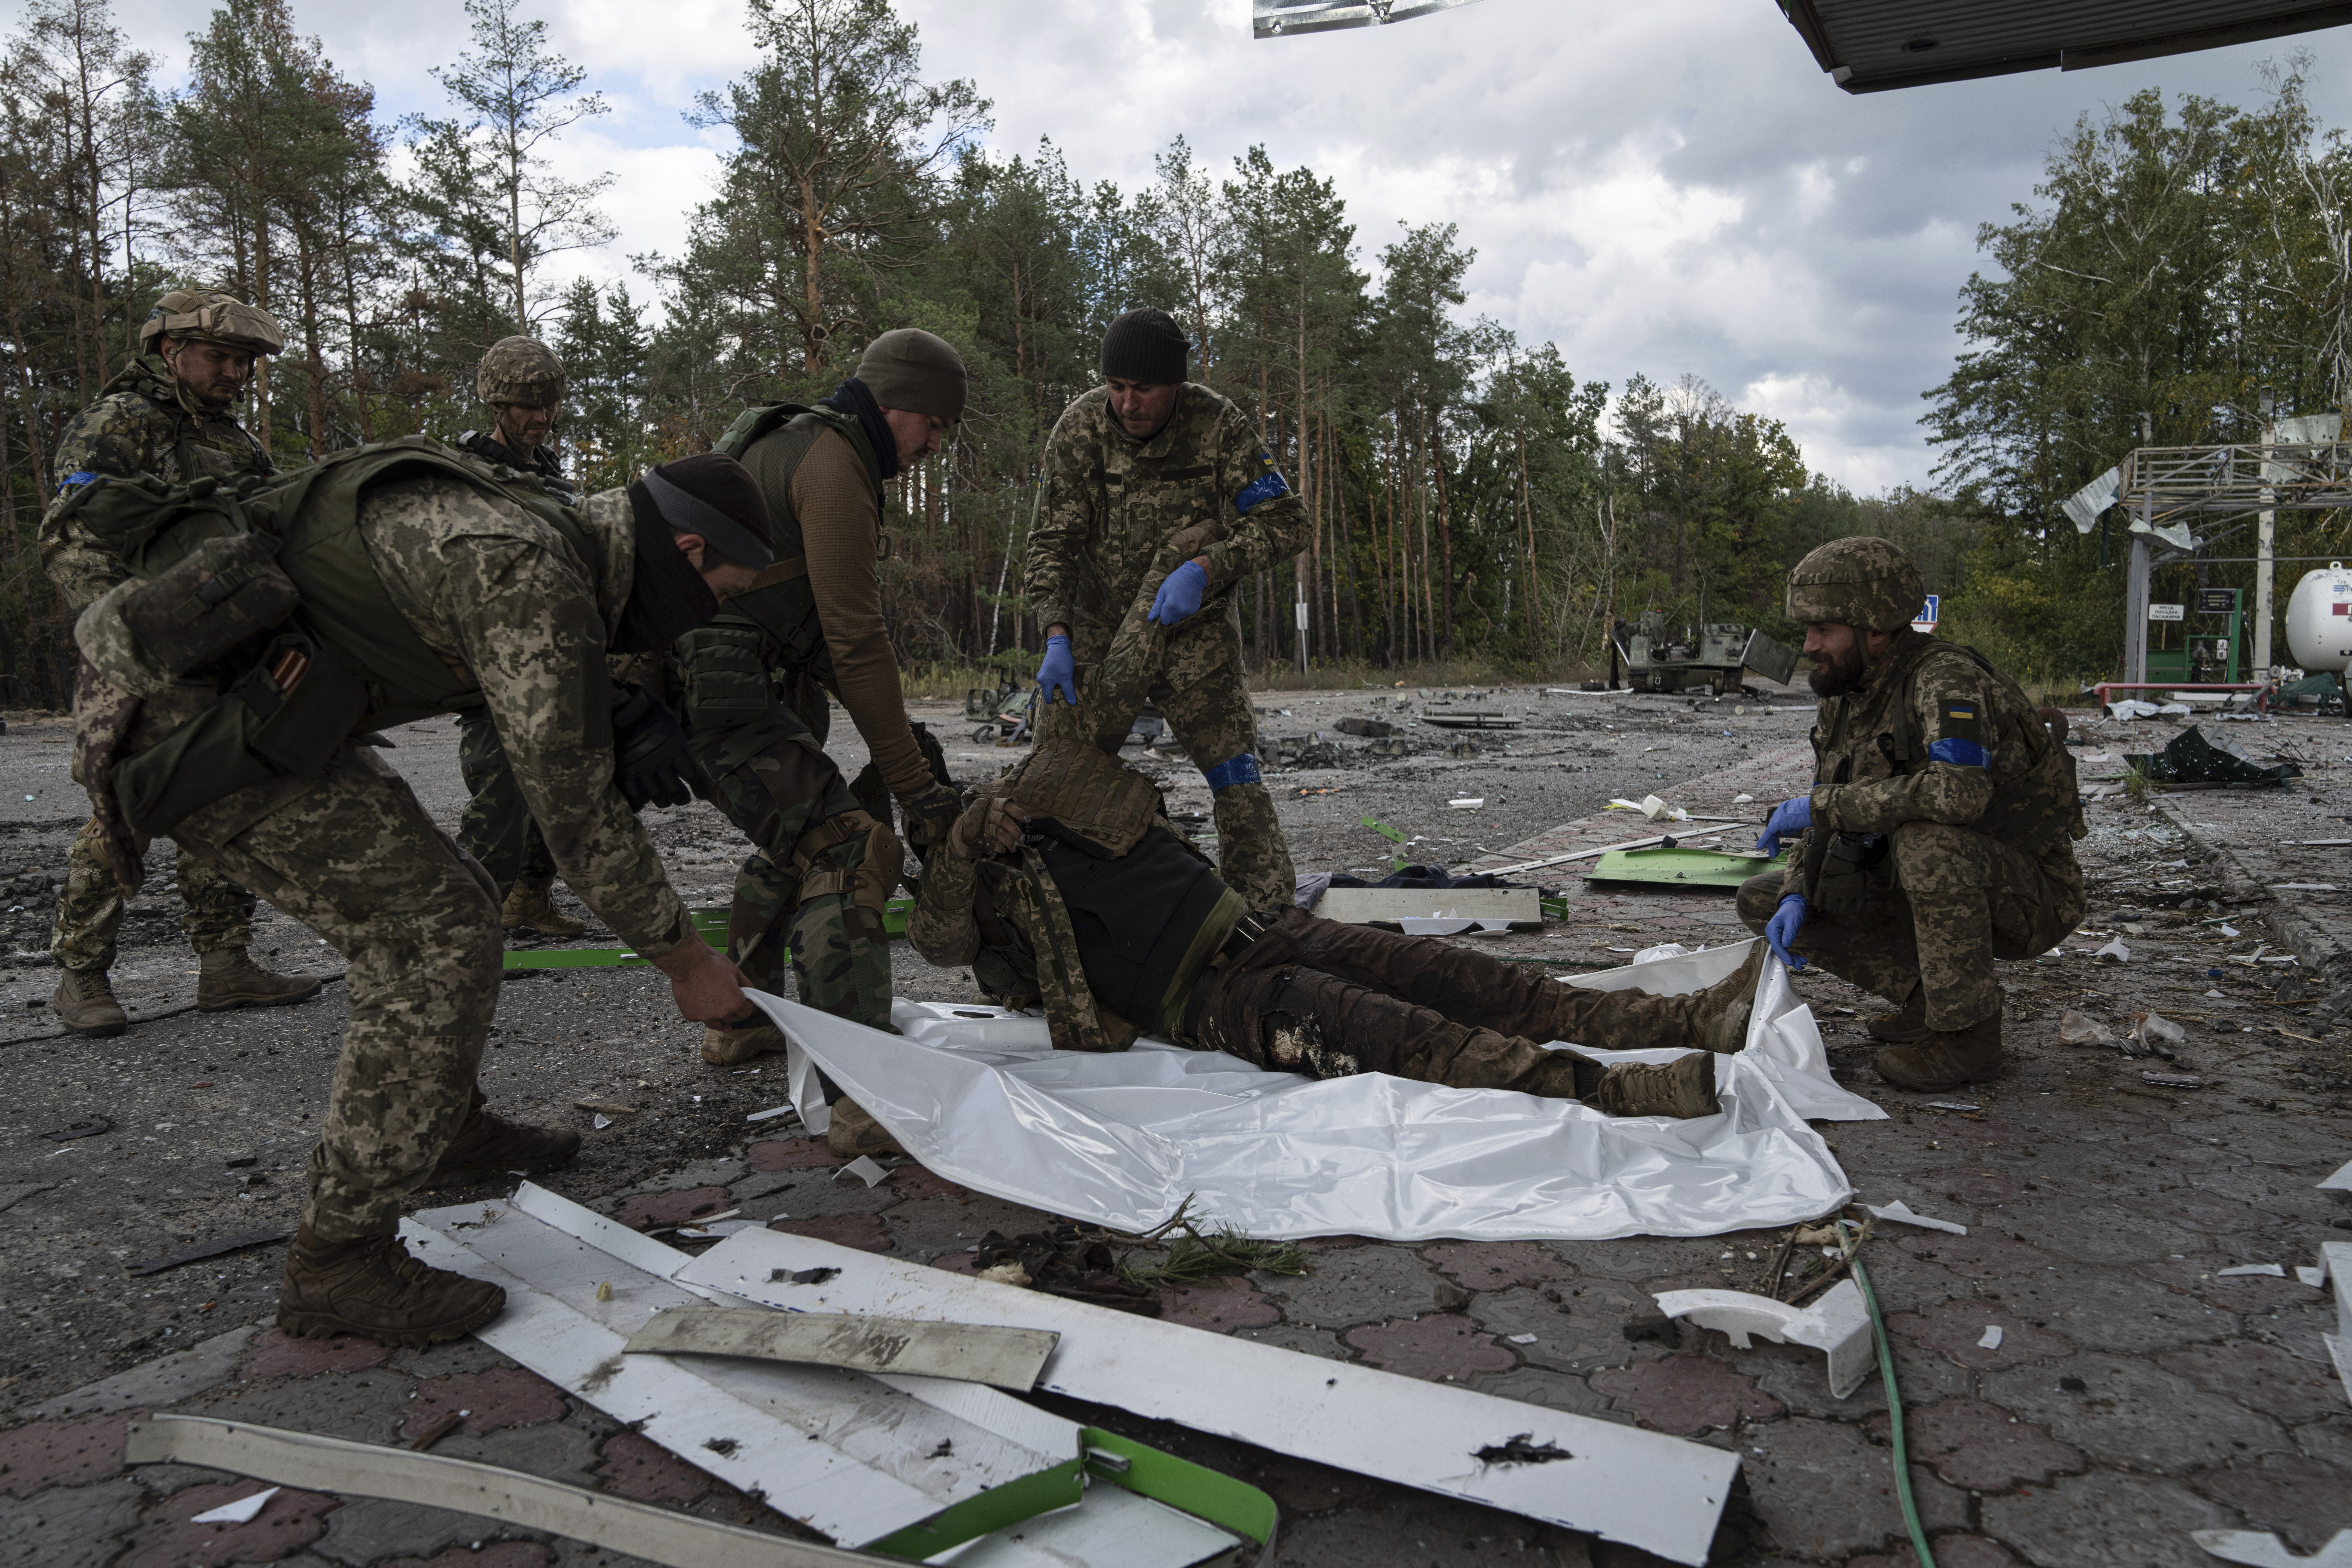 The Image On The Ground Highlighted The Chaos Facing President Vladimir Putin In Response To Ukraine'S Progress.  (Ap Photo/Evgeny Maloletka)